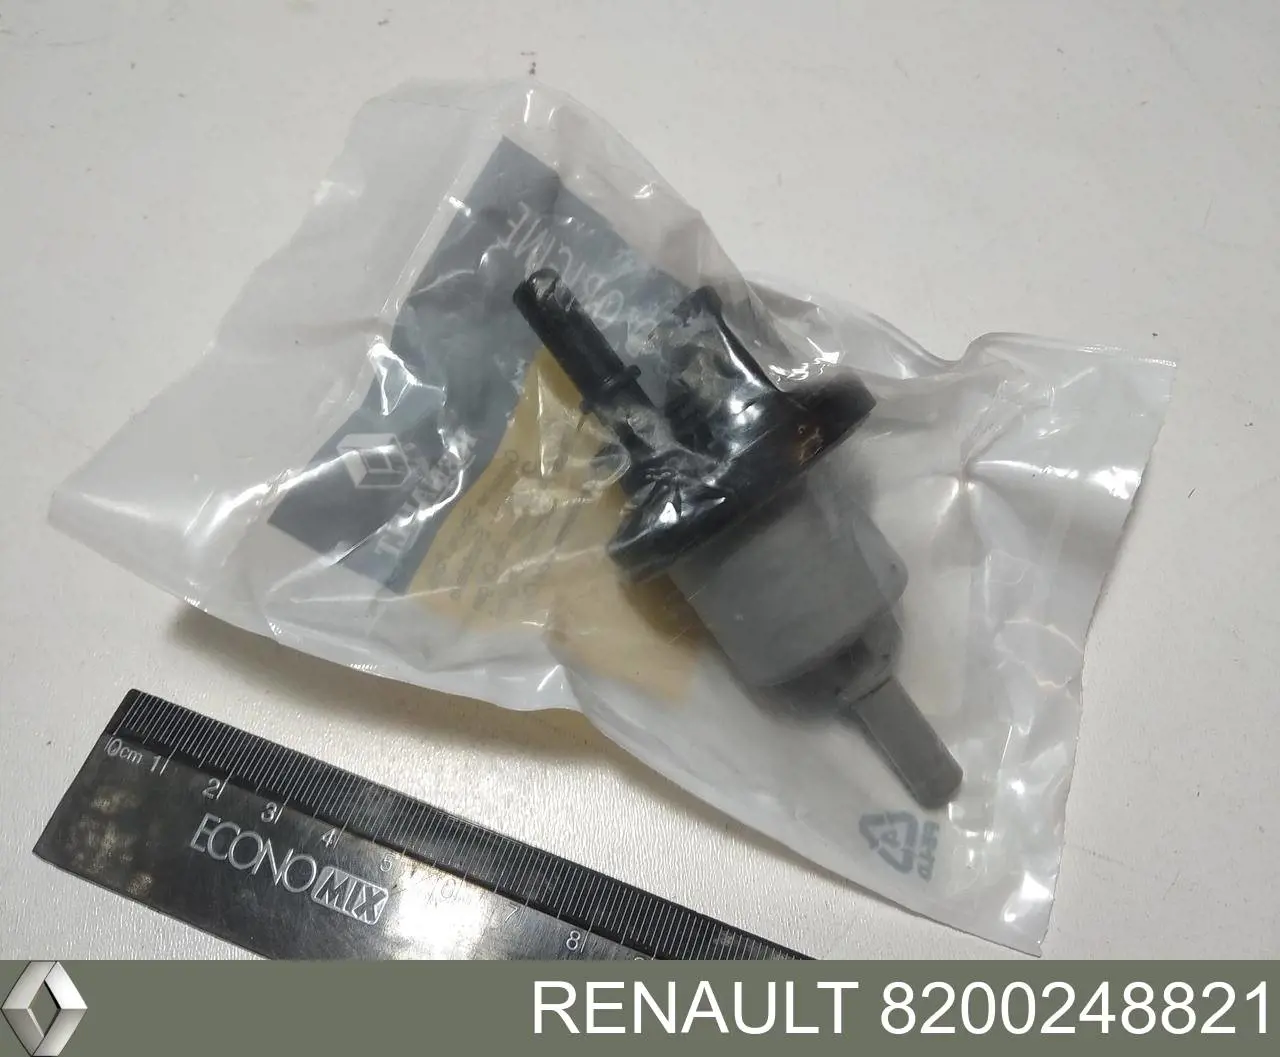 8200248821 Renault (RVI) valvula de adsorcion de vapor de combustible